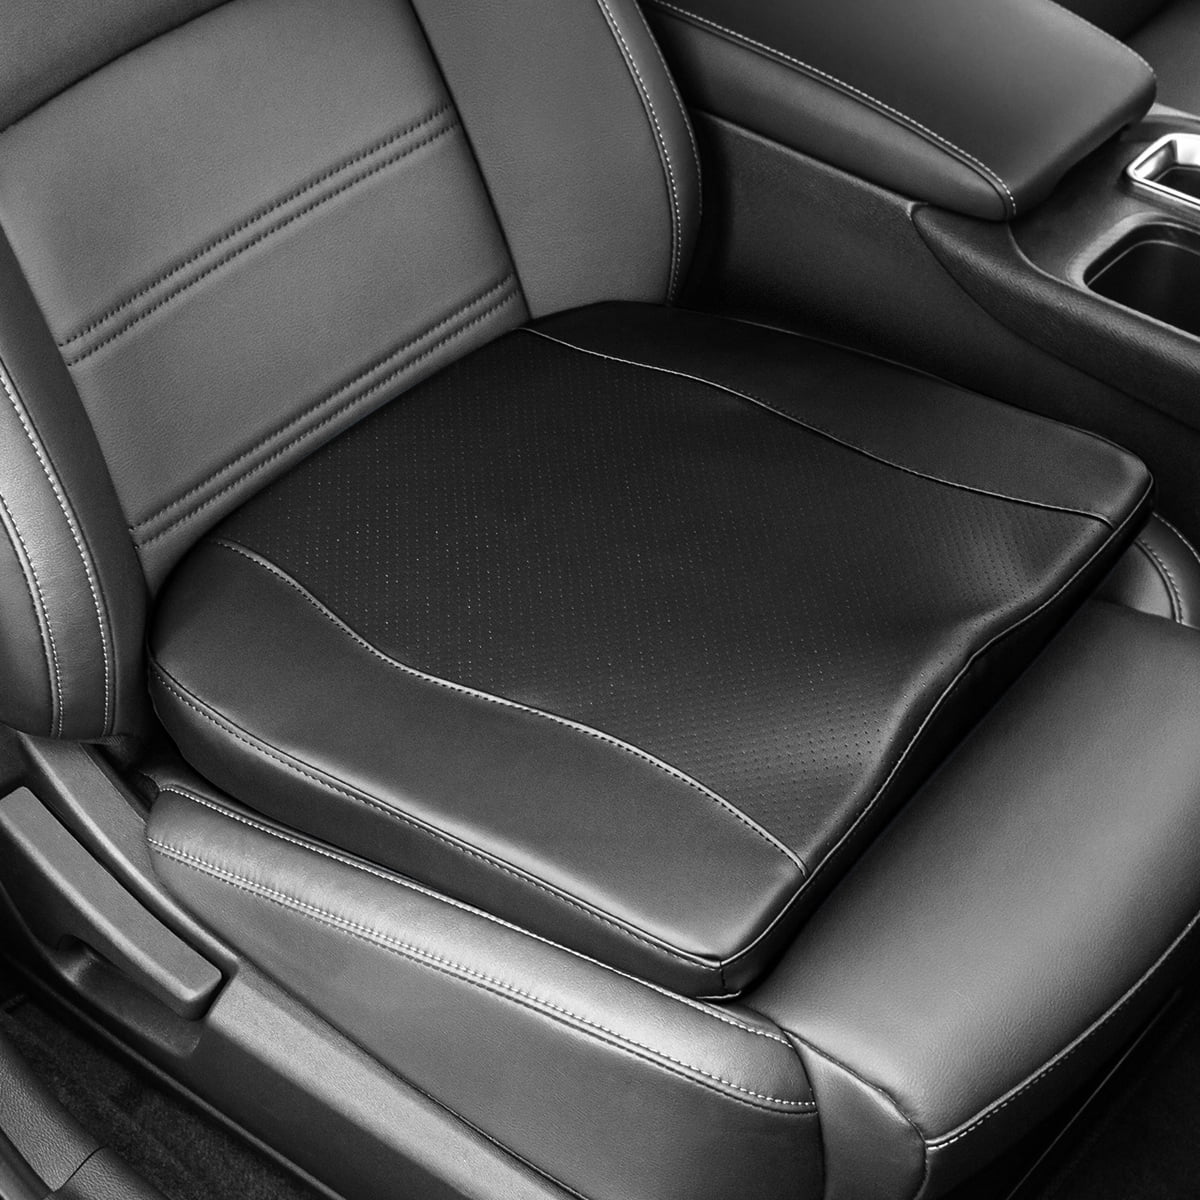 ELUTO High-Density Memory Foam Seat Cushion, Ergonomic Design for